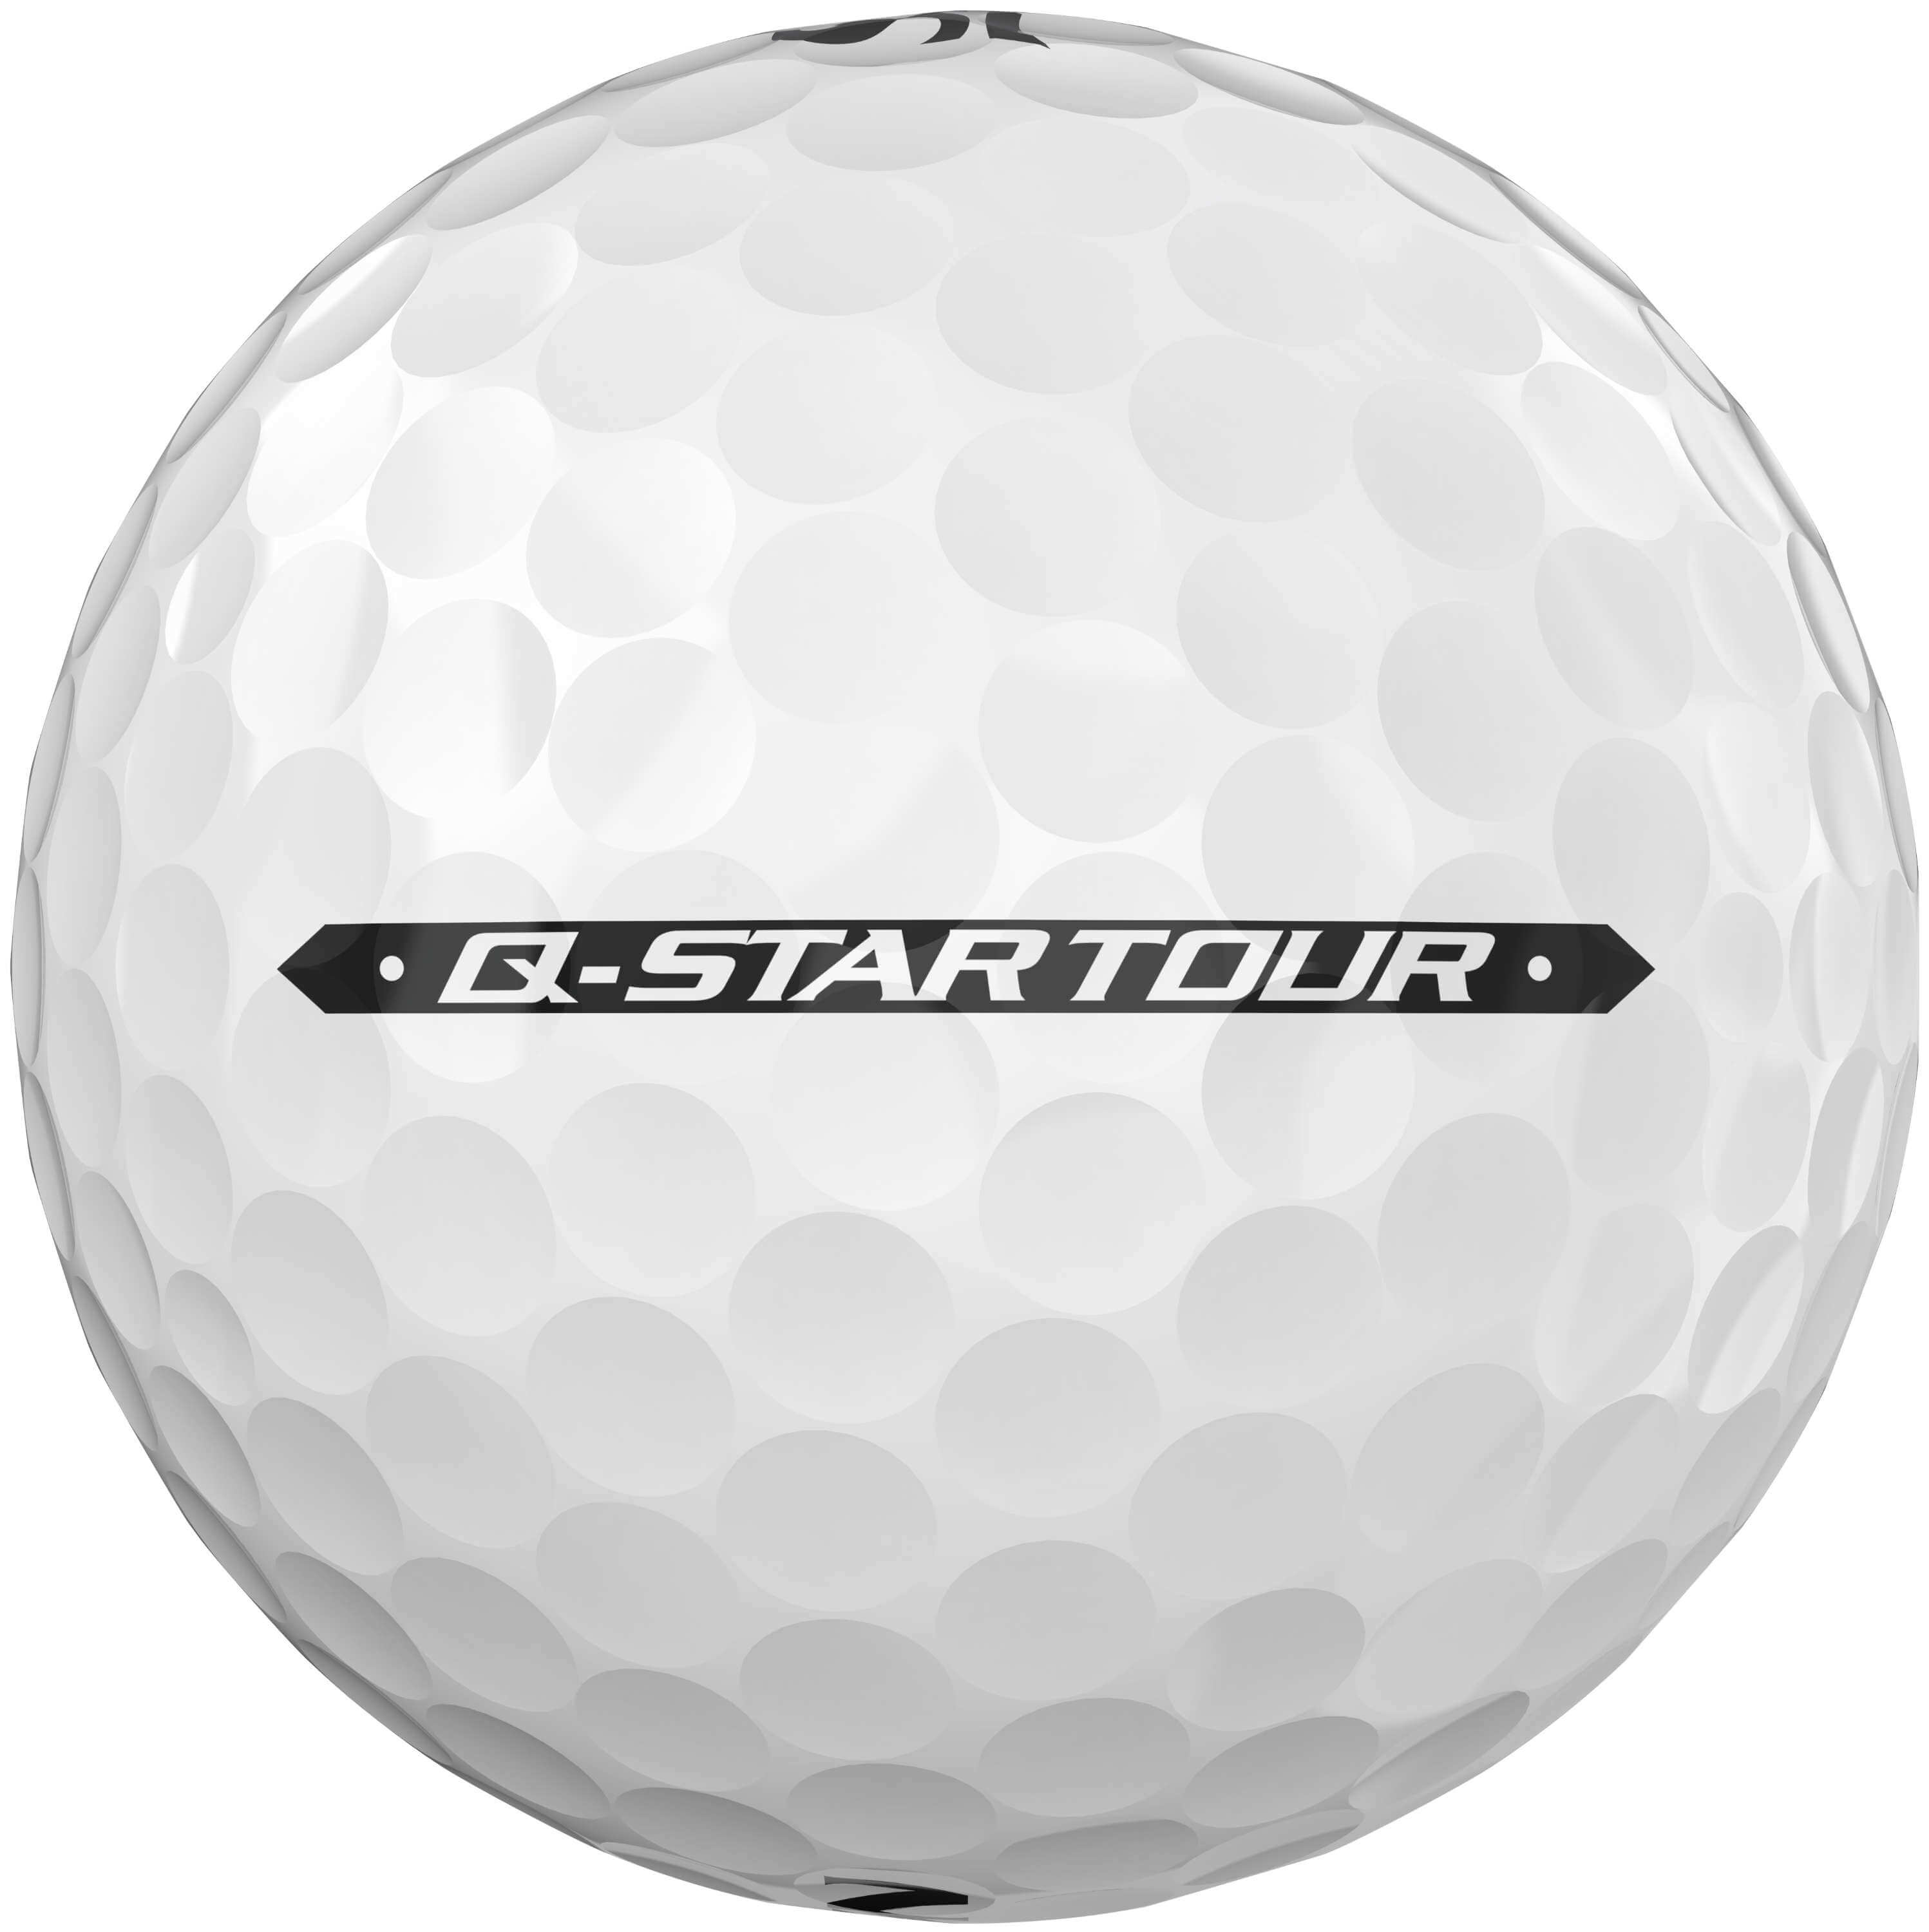 Srixon Q-Star Tour Golfbälle